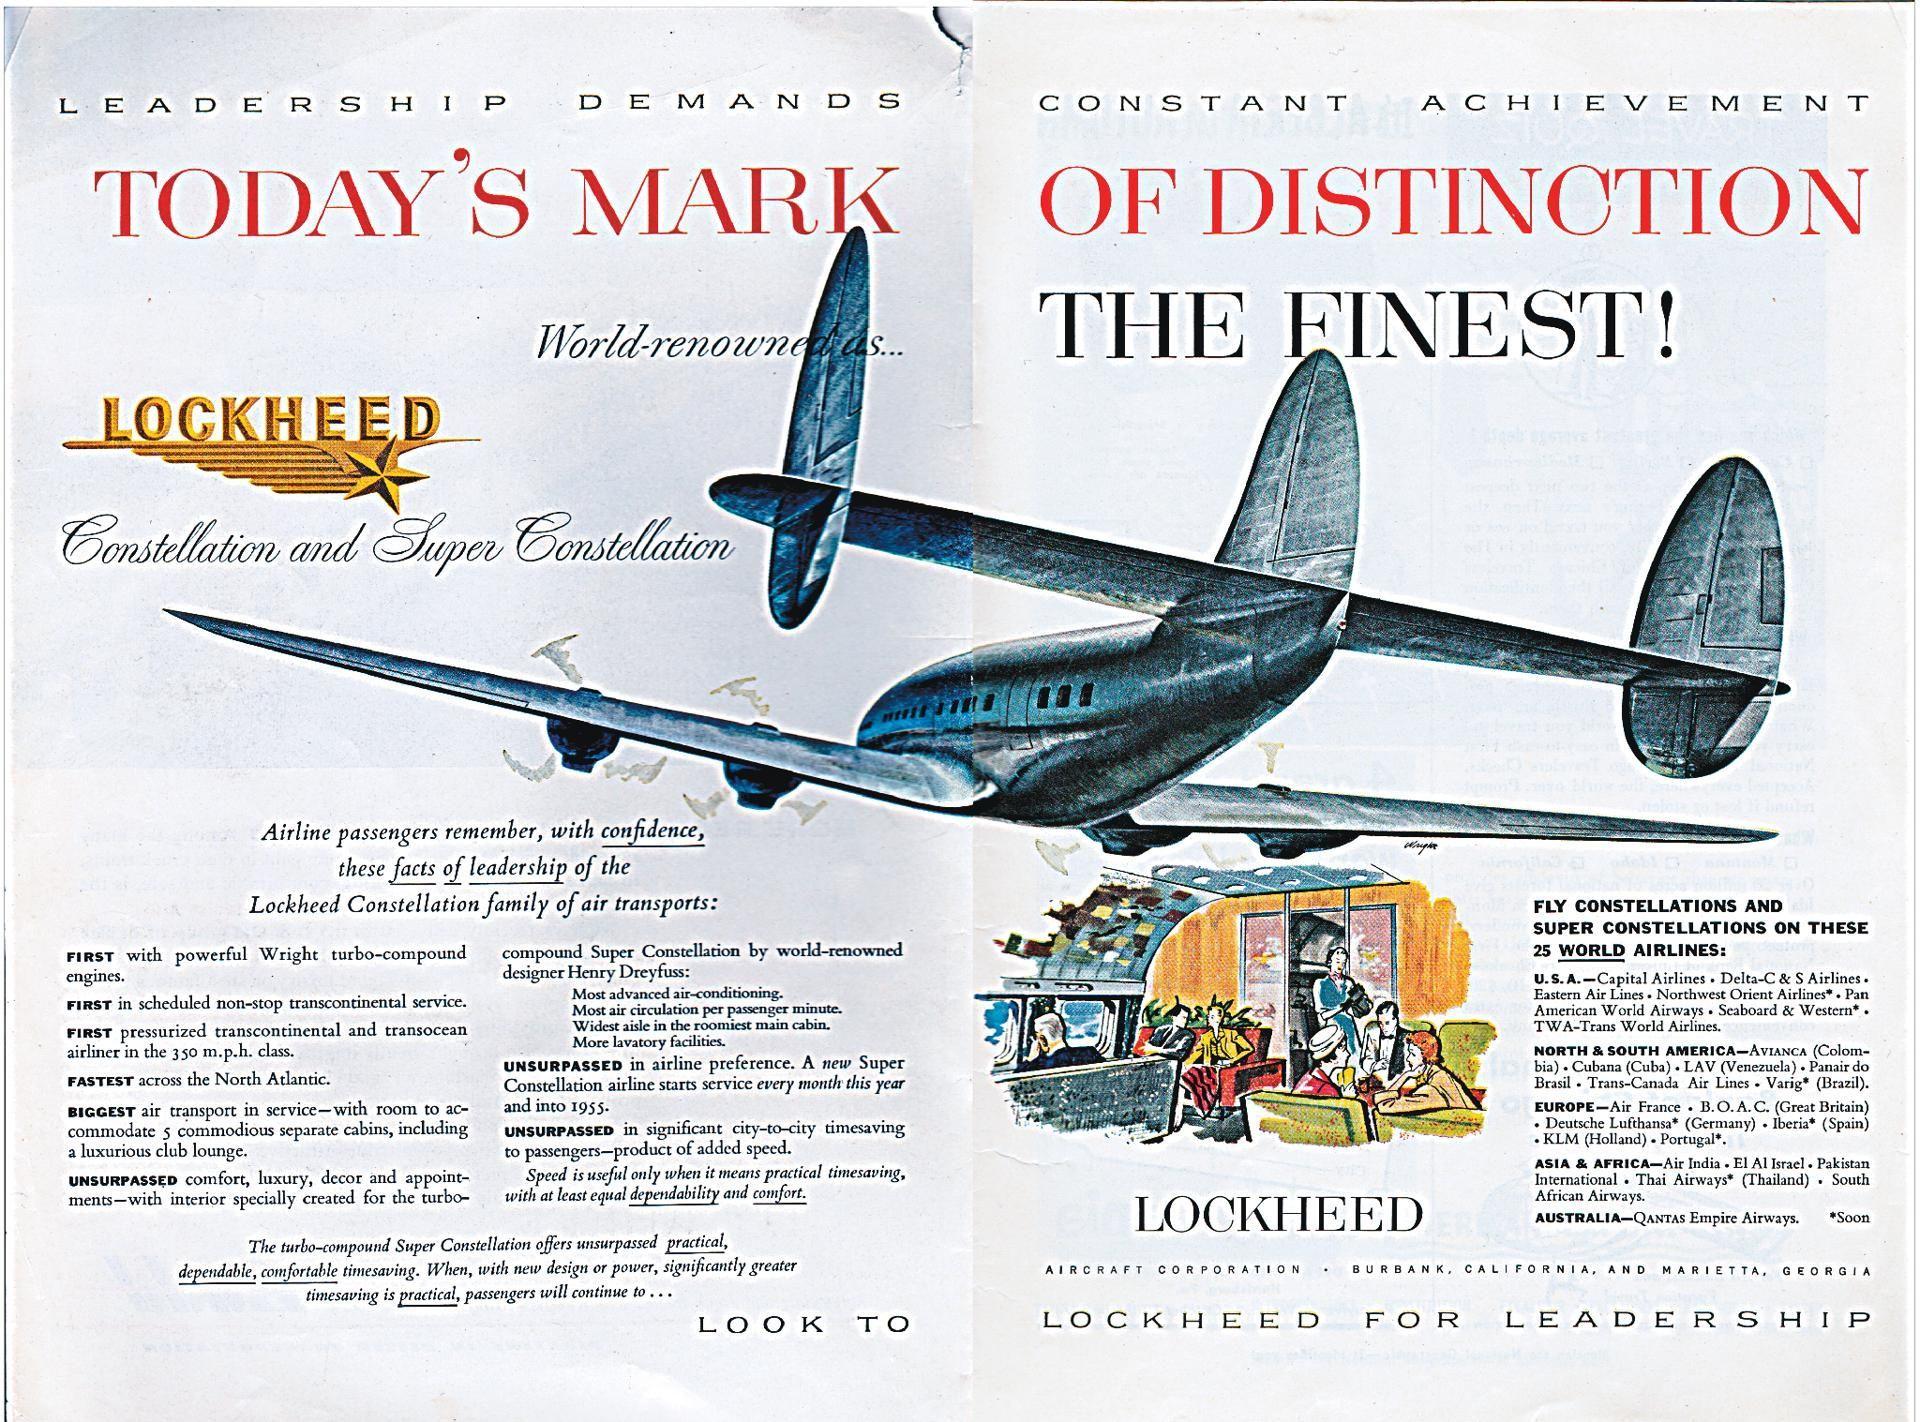 Old Lockheed Logo - The height of luxury - The Boston Globe | Laurance Allen | Pinterest ...